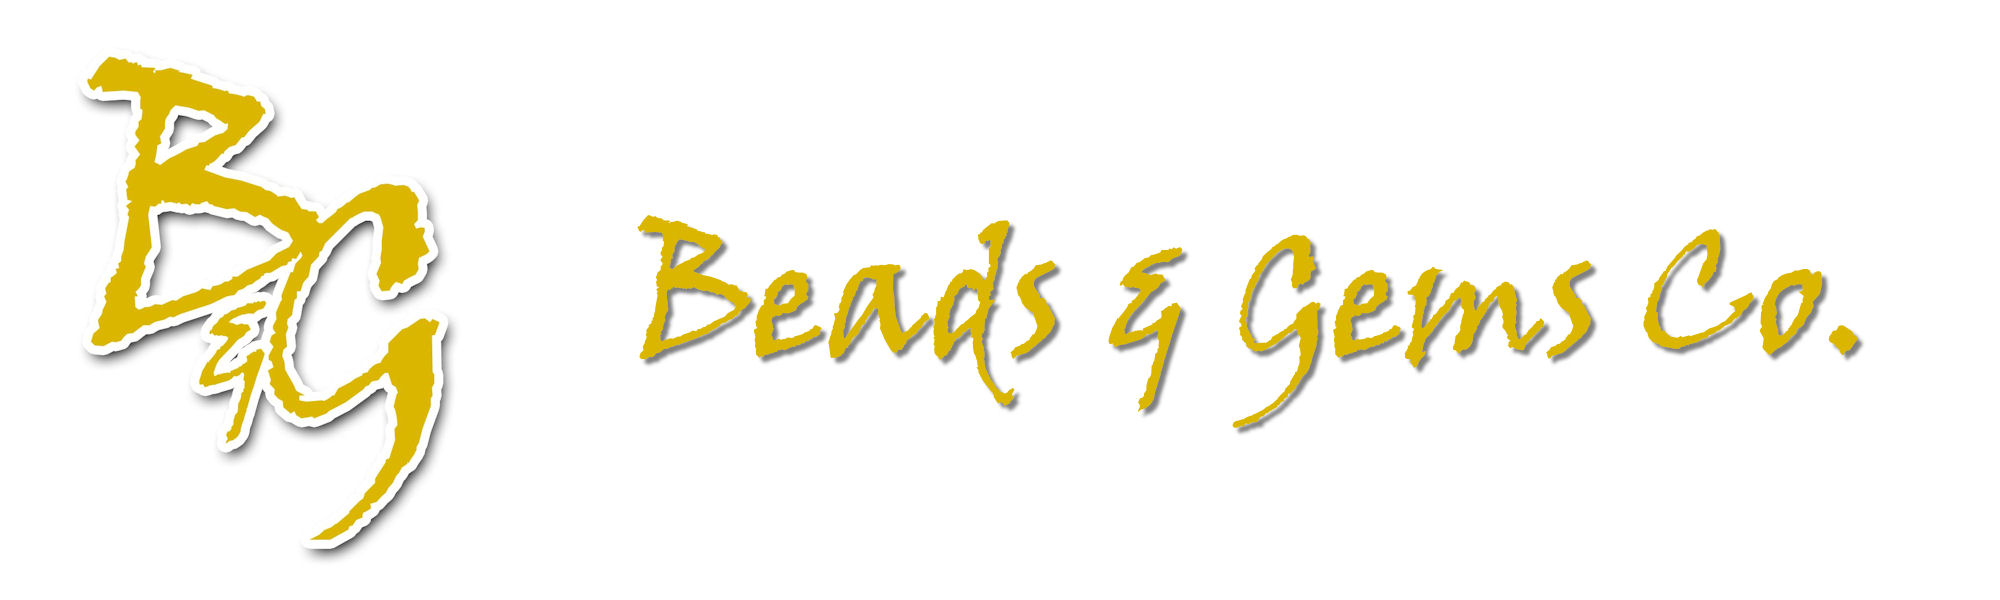 Beads & Gems Co.